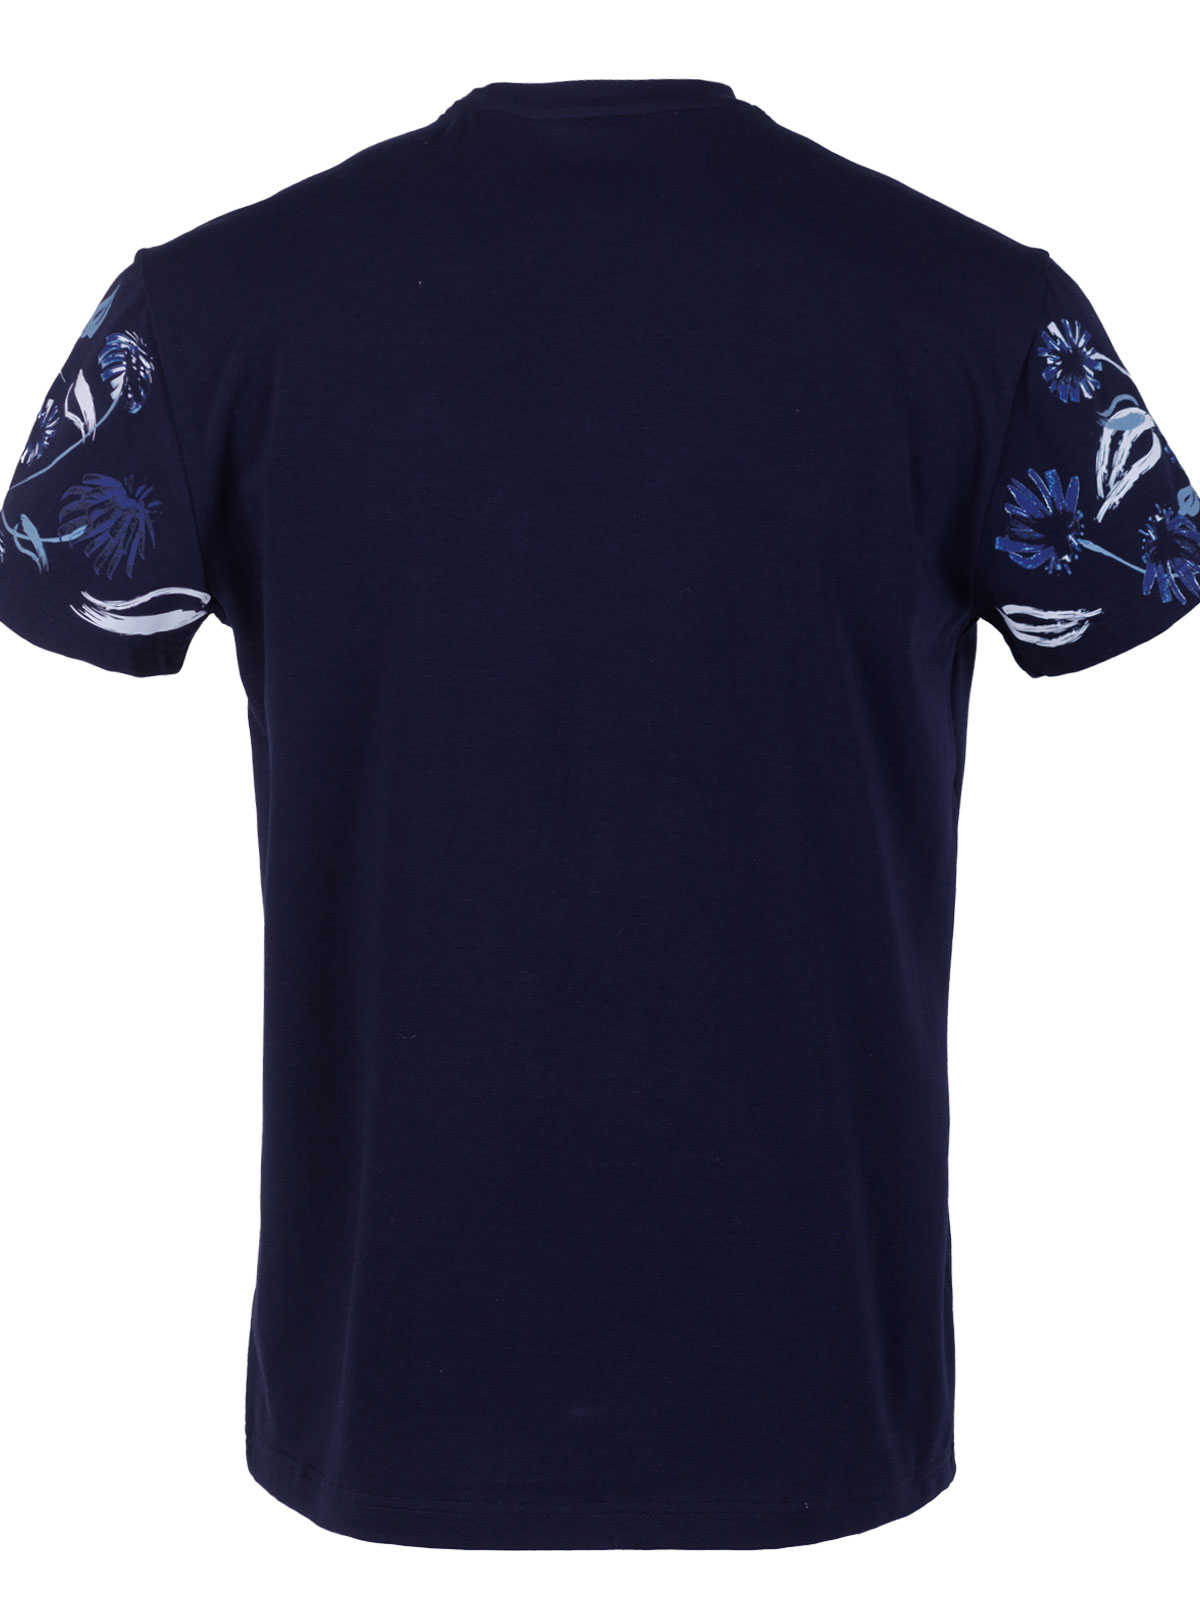 Bluza albastra cu imprimeu de flori - 96472 € 27.56 img2